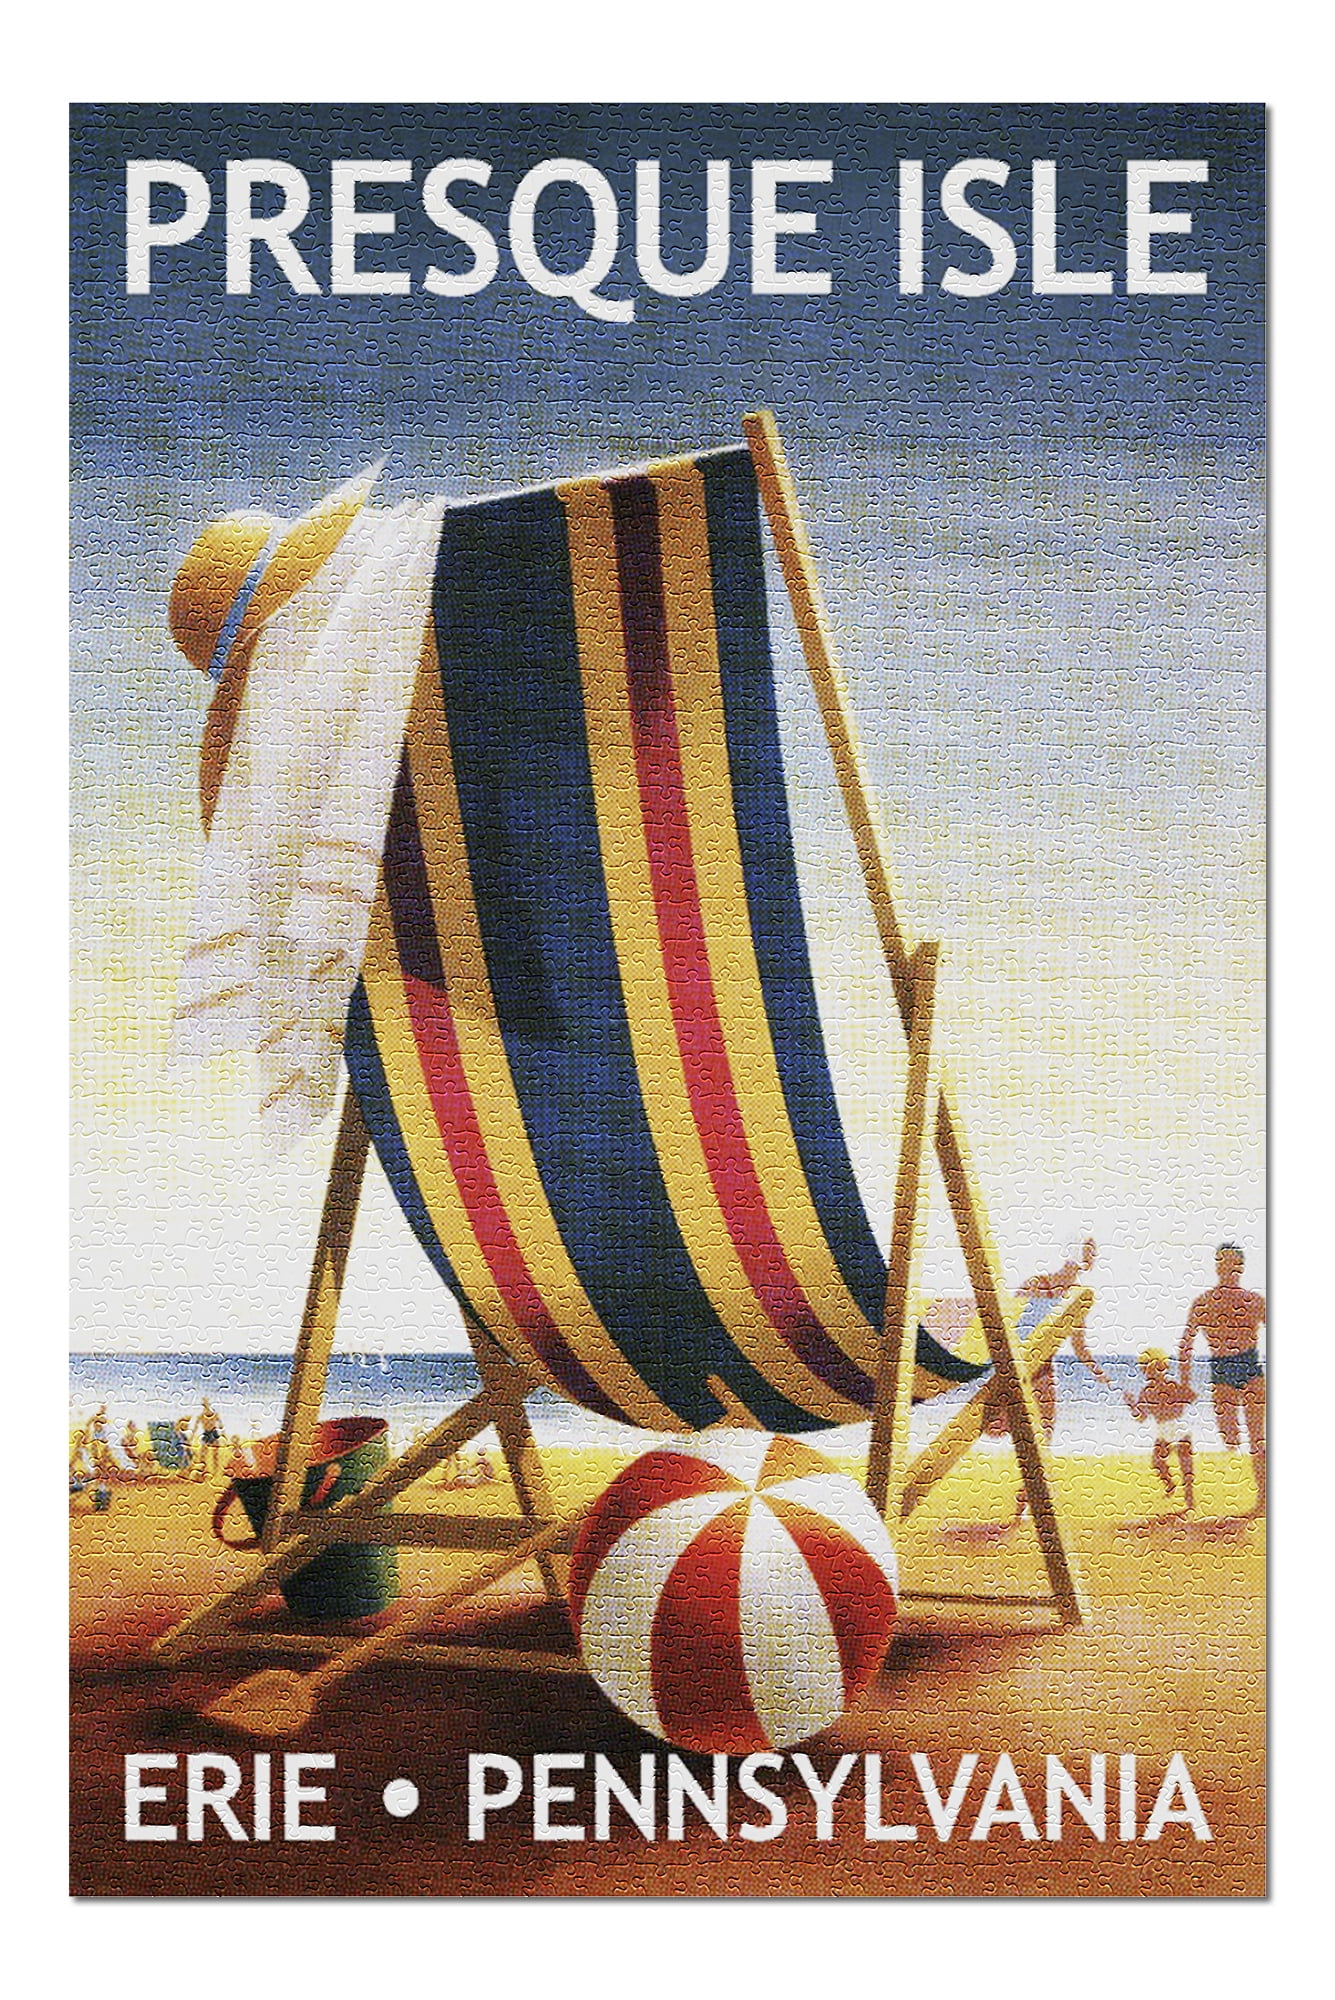 Presque Isle Lake Erie Pennsylvania Vintage Travel Advertisement Art Poster 